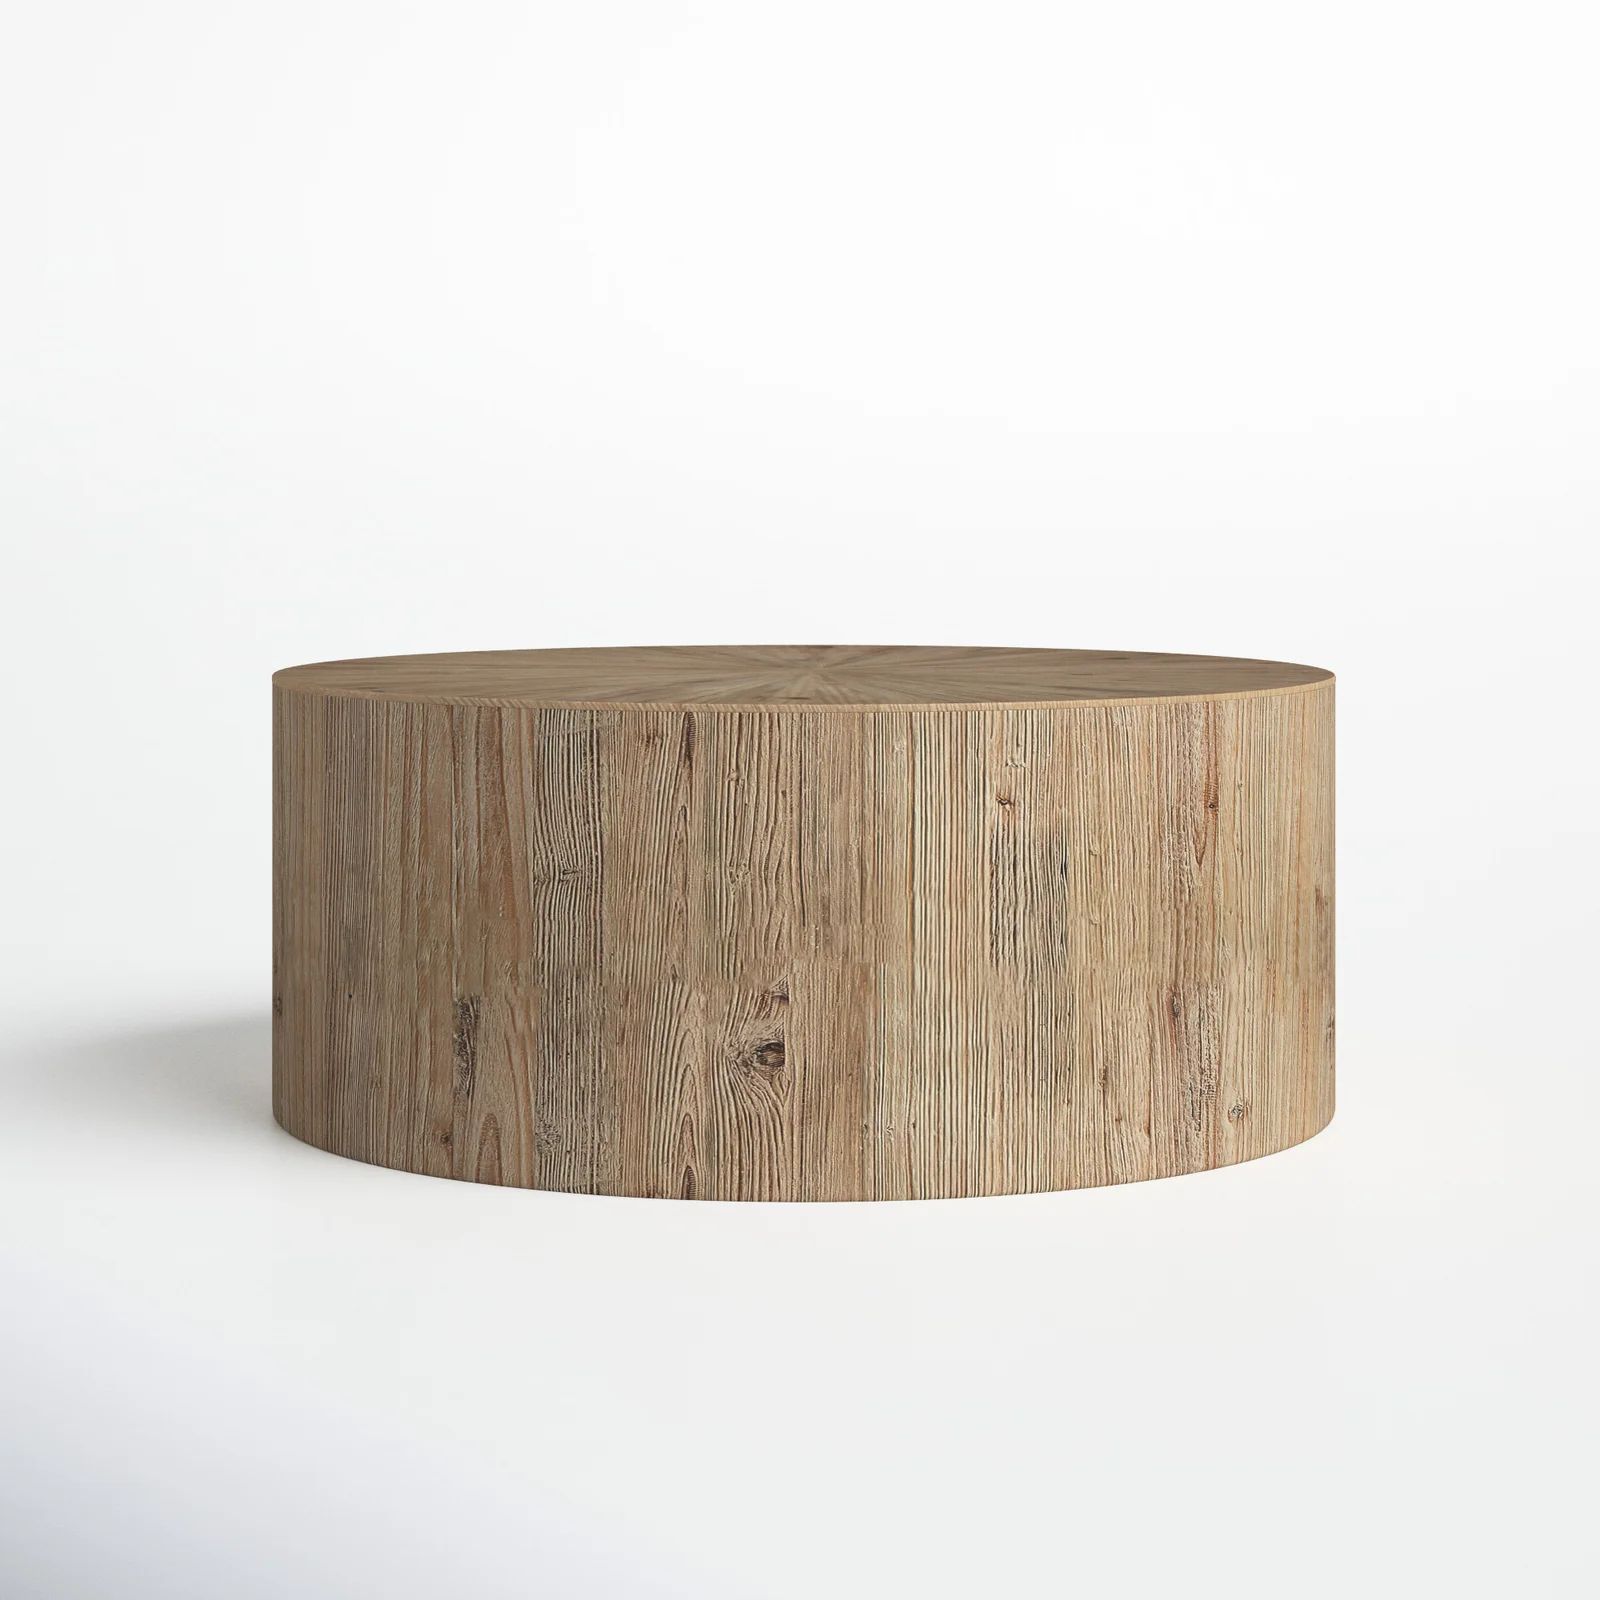 Maria Solid Wood Solid Coffee Table | Wayfair Professional